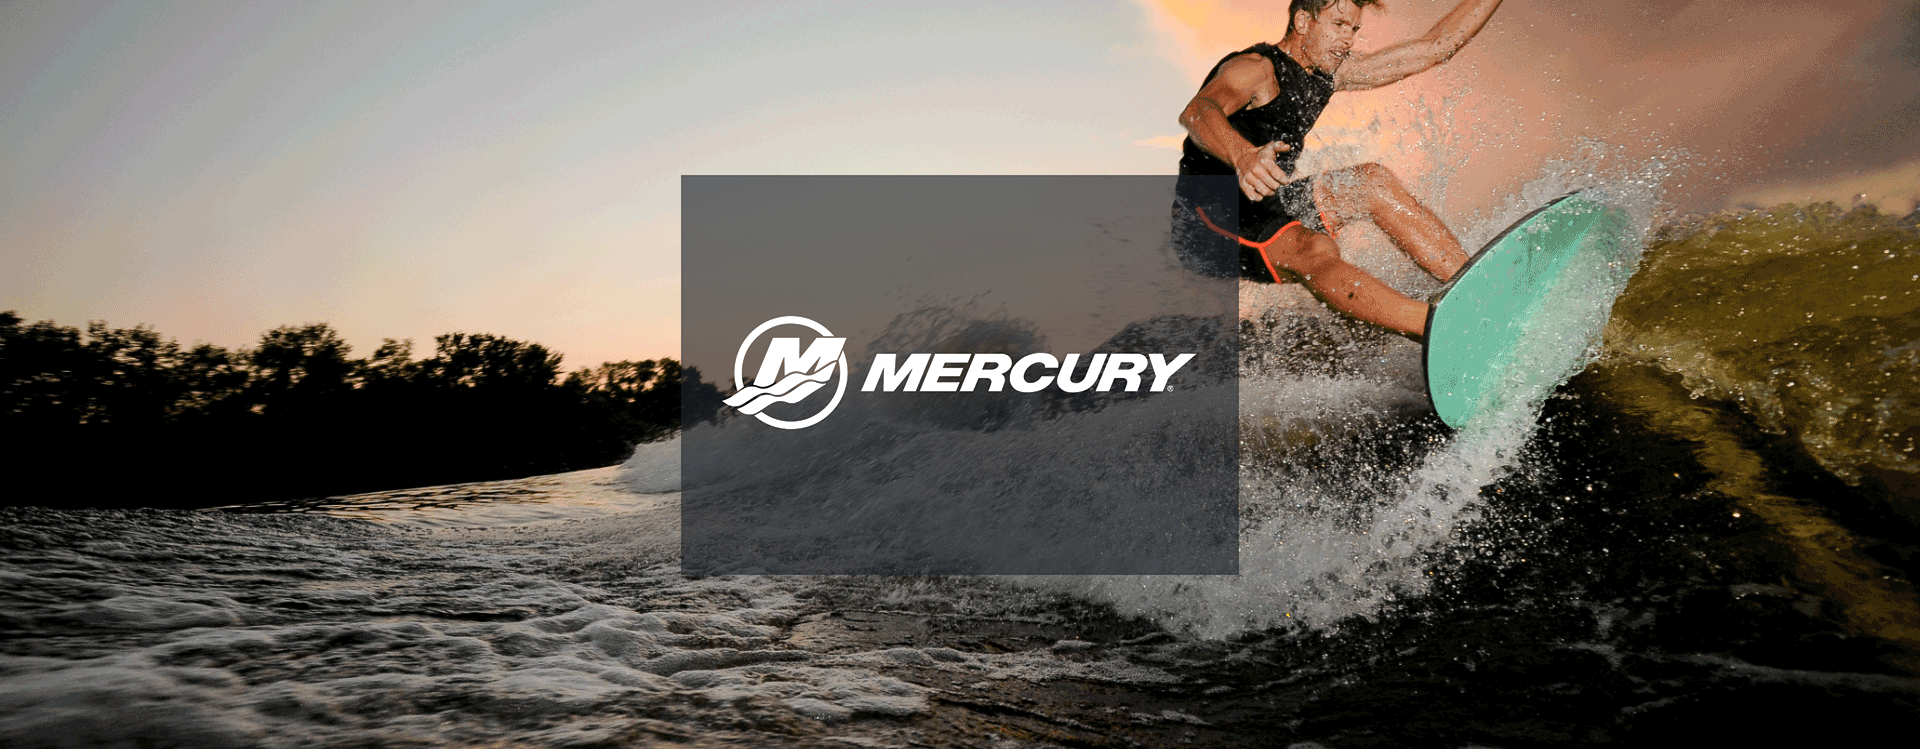 mercury-hero-web.png